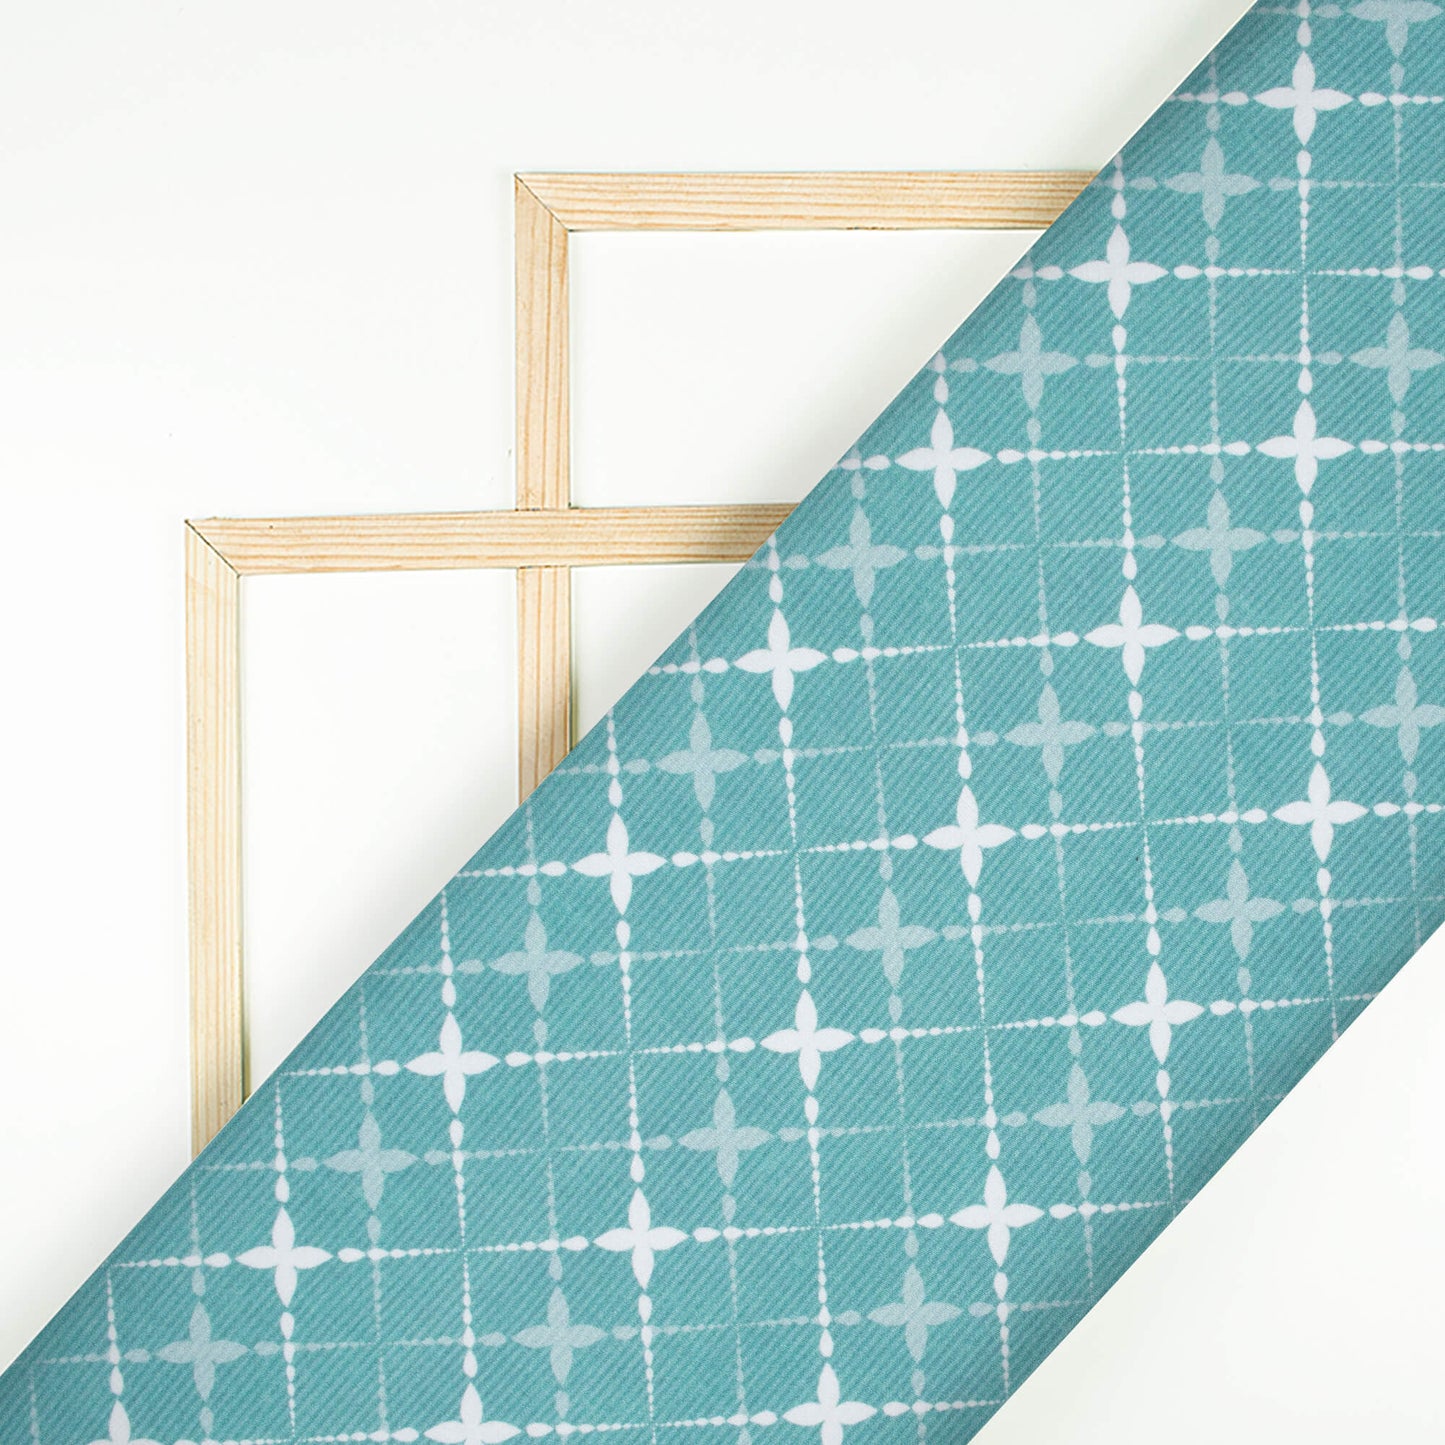 Smalt Blue And White Geometric Pattern Digital Print Crepe Silk Fabric